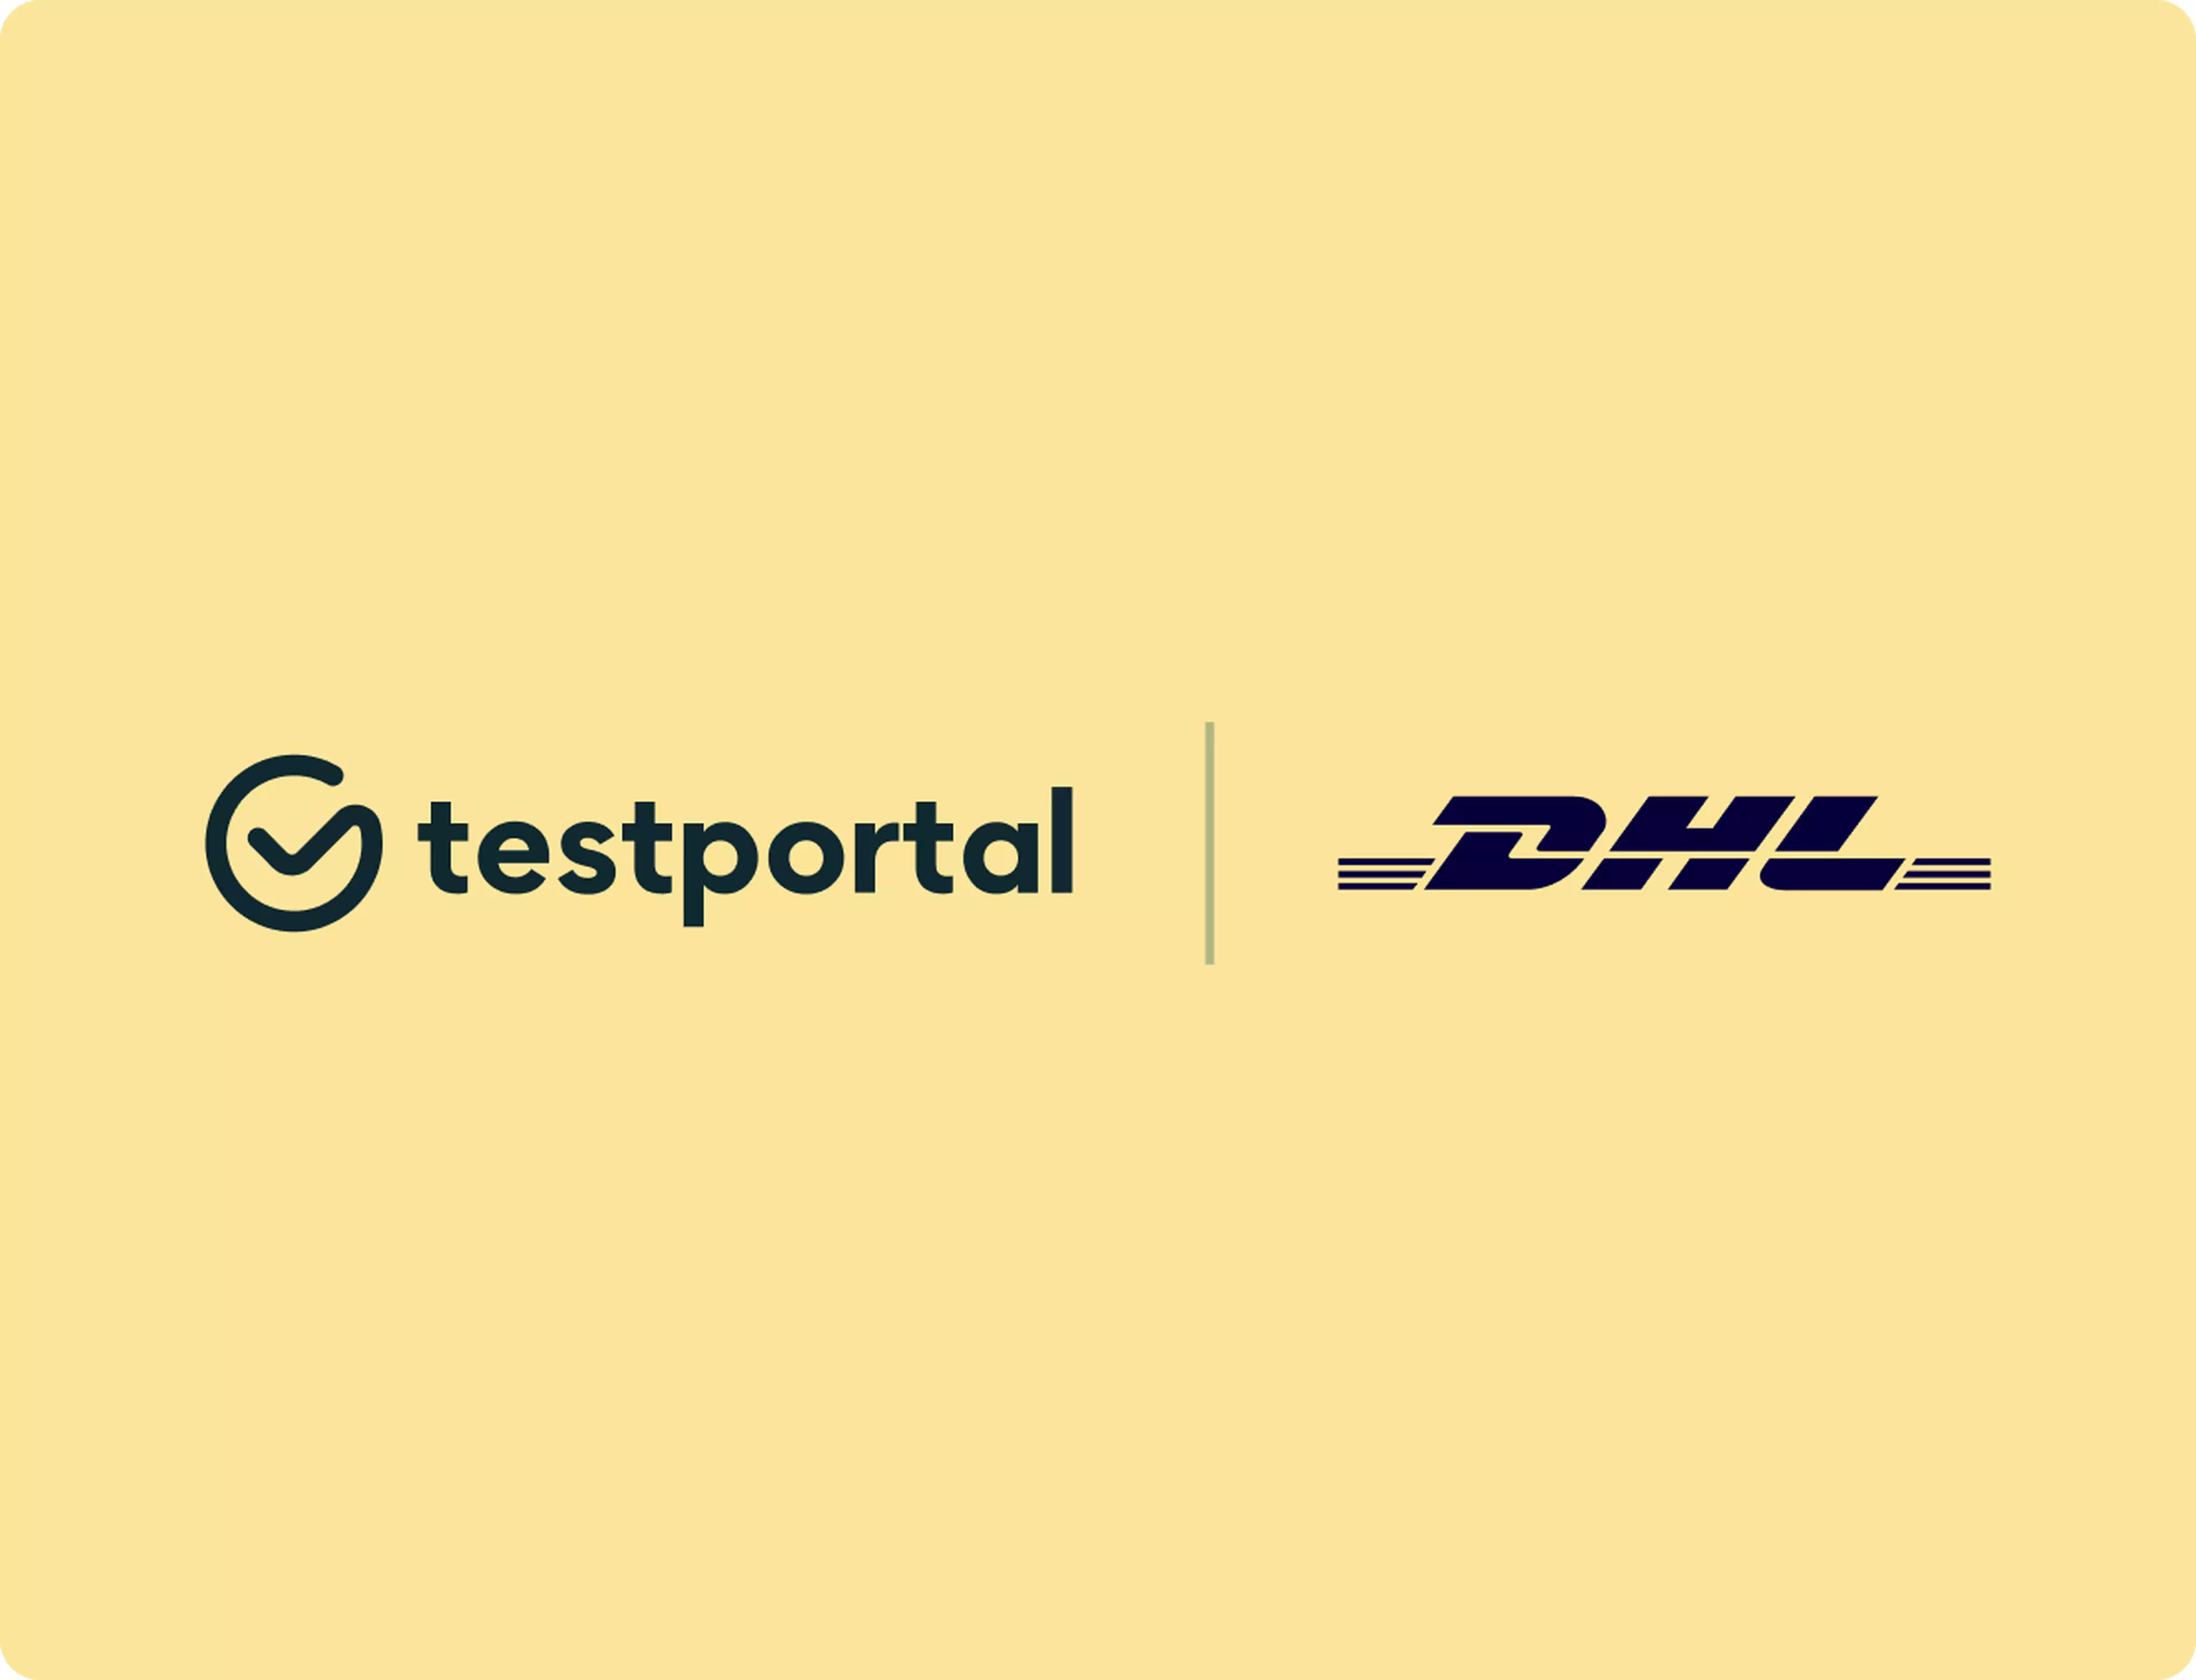 DHL&Testportal, advanced online tests for business